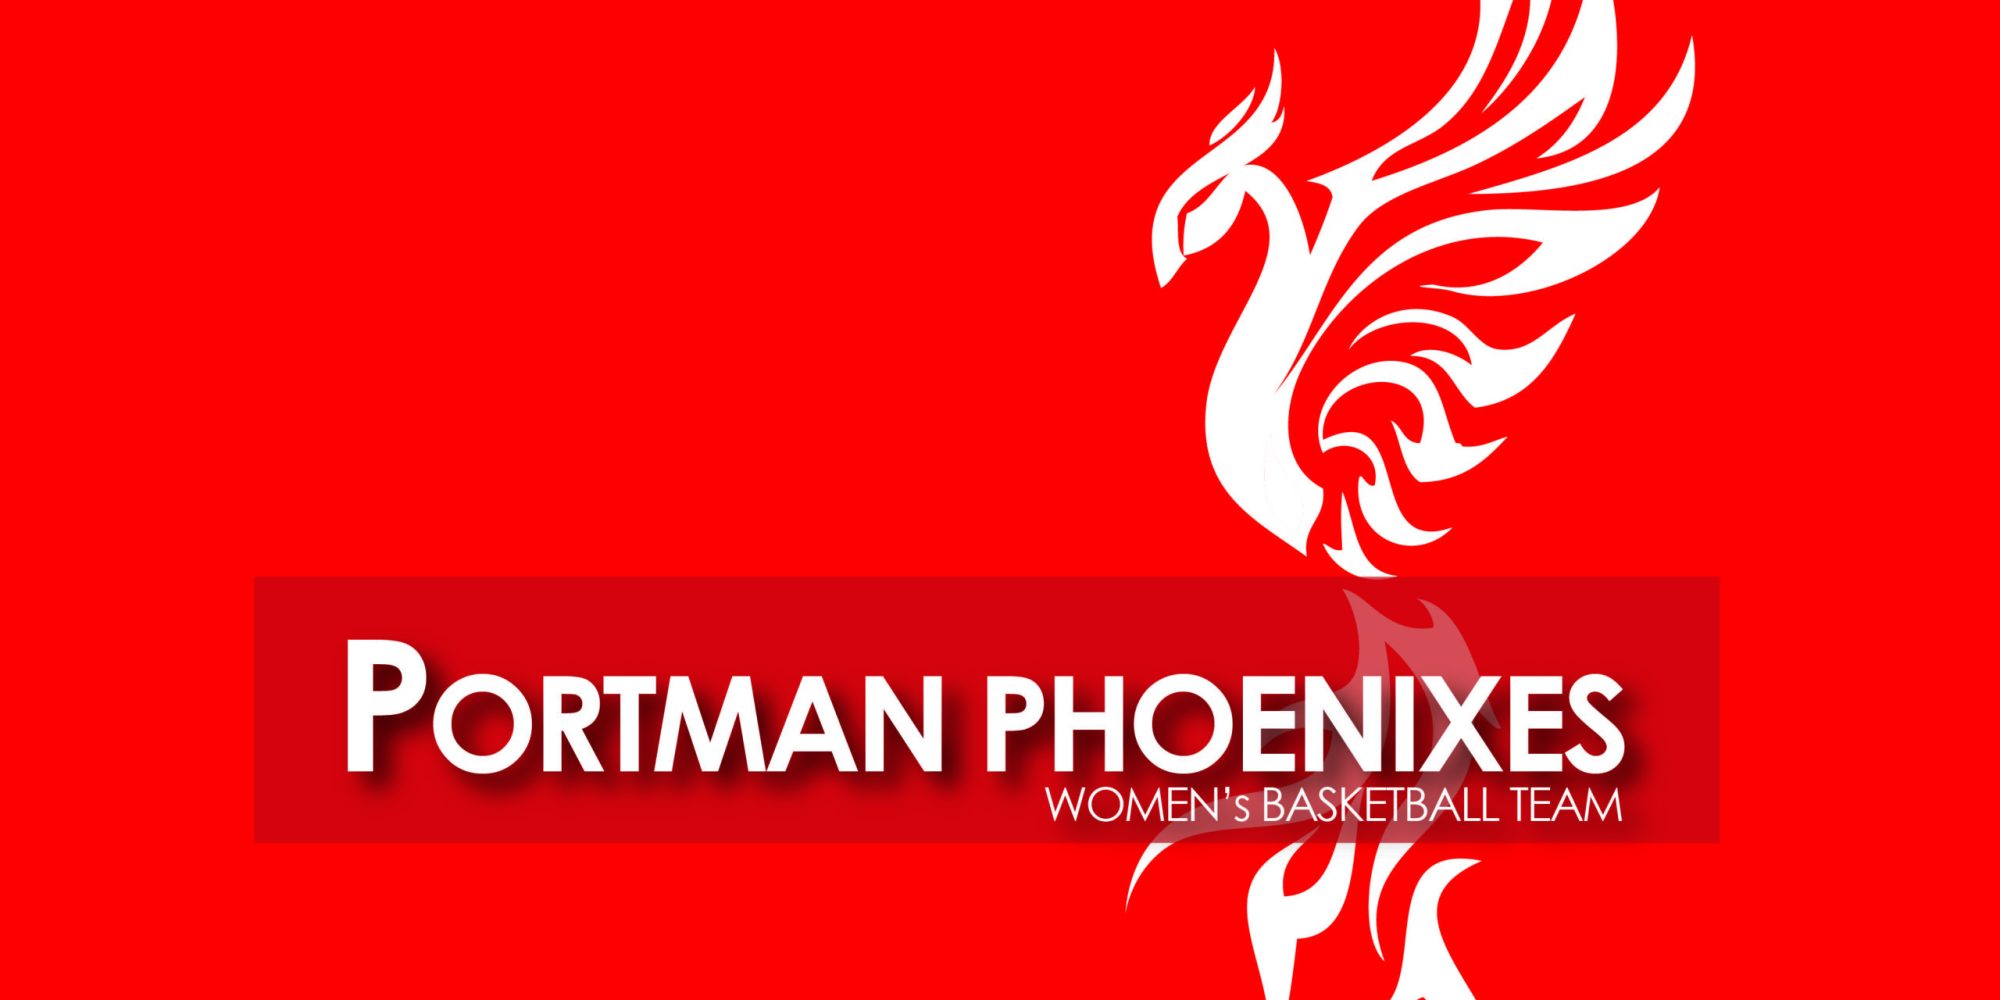 160518_PC_PORTMAN-Phoenixes-Logo-02